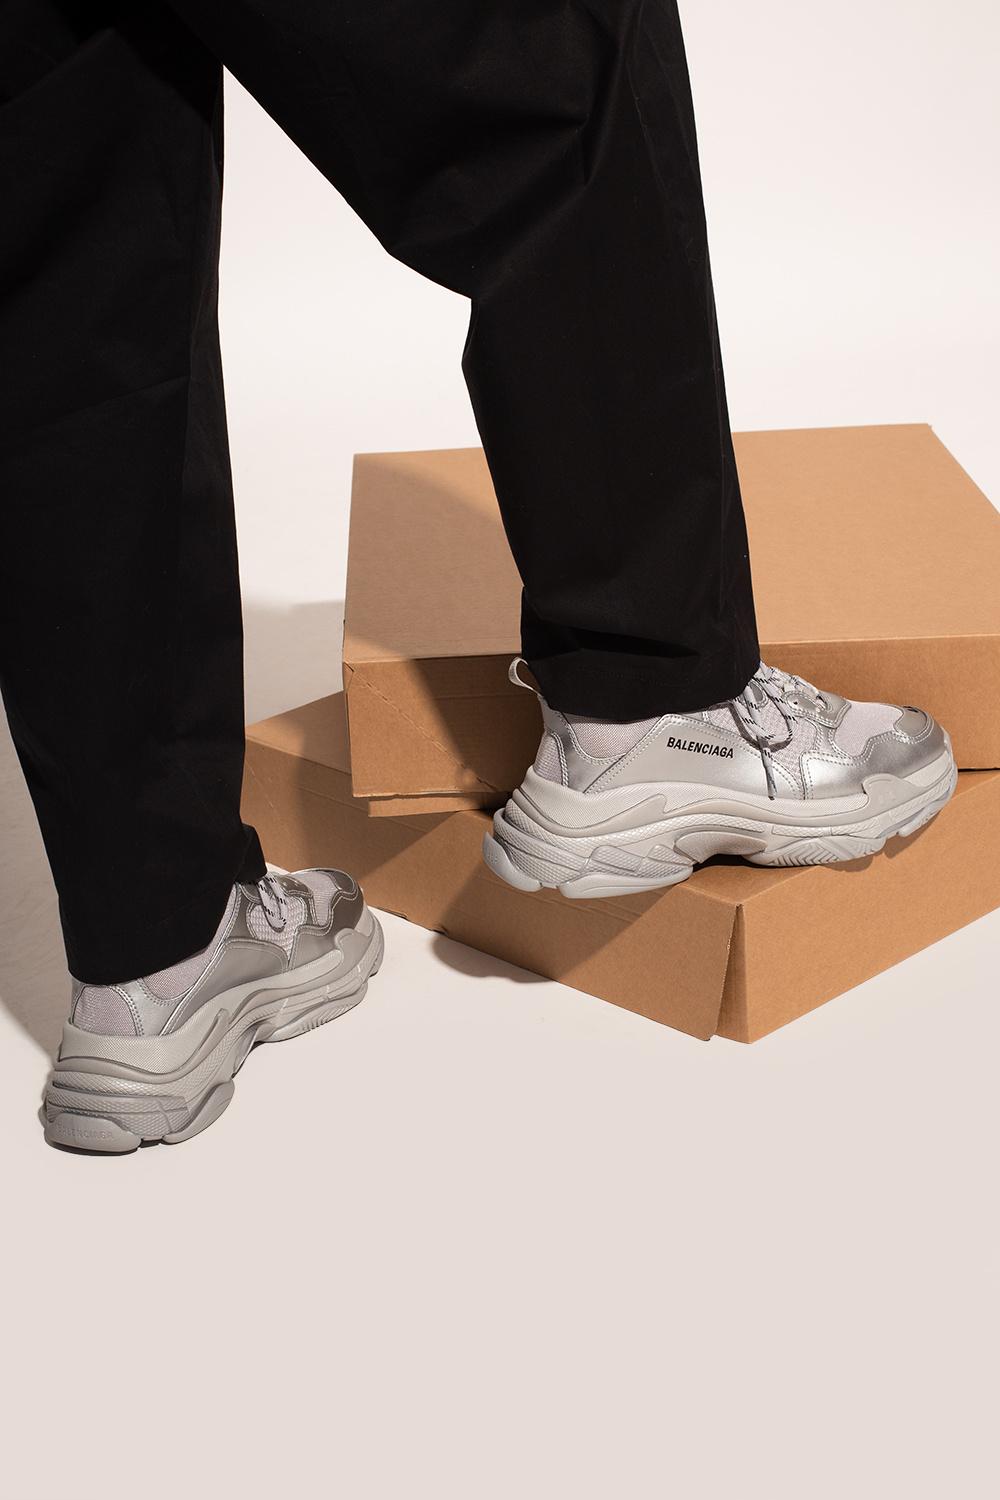 Balenciaga 'triple S' Sneakers in Metallic for Men | Lyst